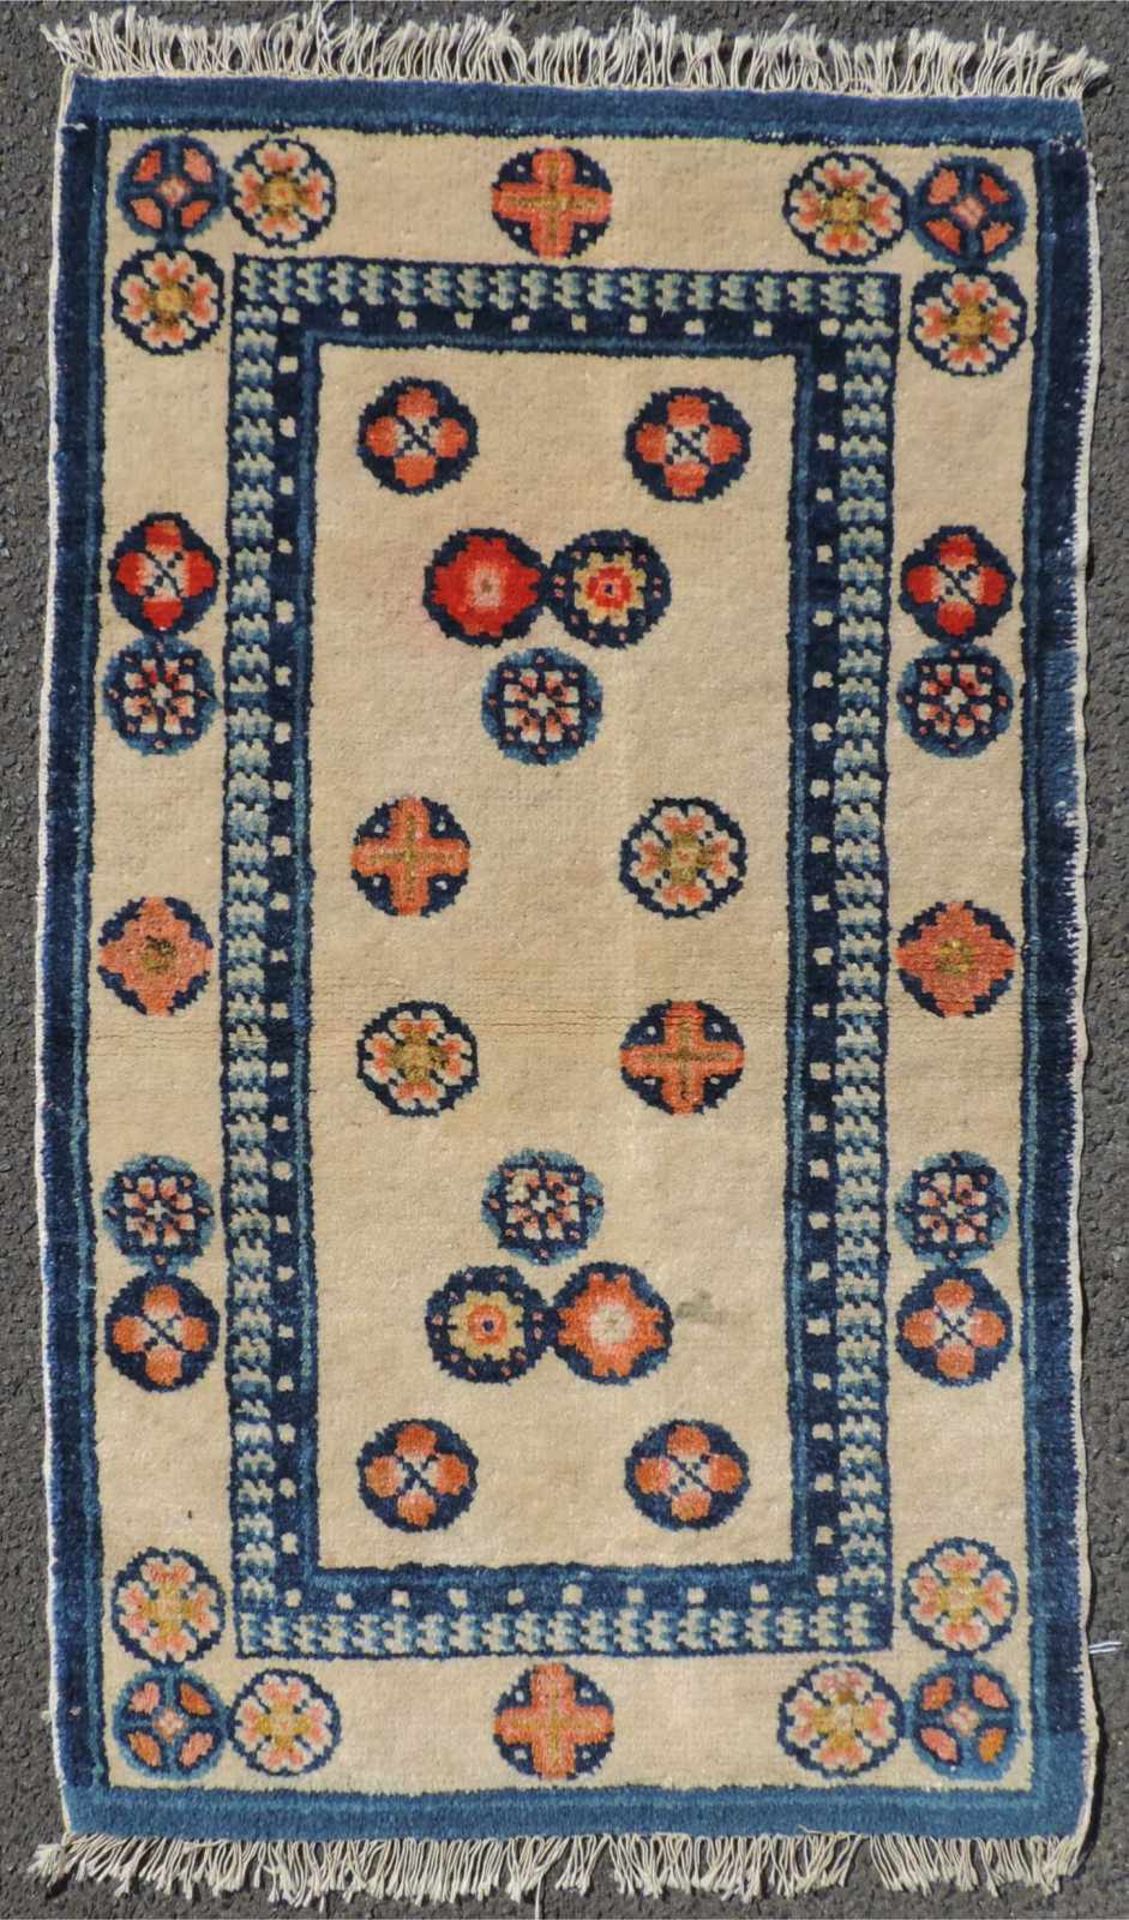 Pau Tou Meditationsteppich. China, antik, um 1900. 87 cm x 50 cm. Handgeknüpft, Wolle auf Baumwolle.